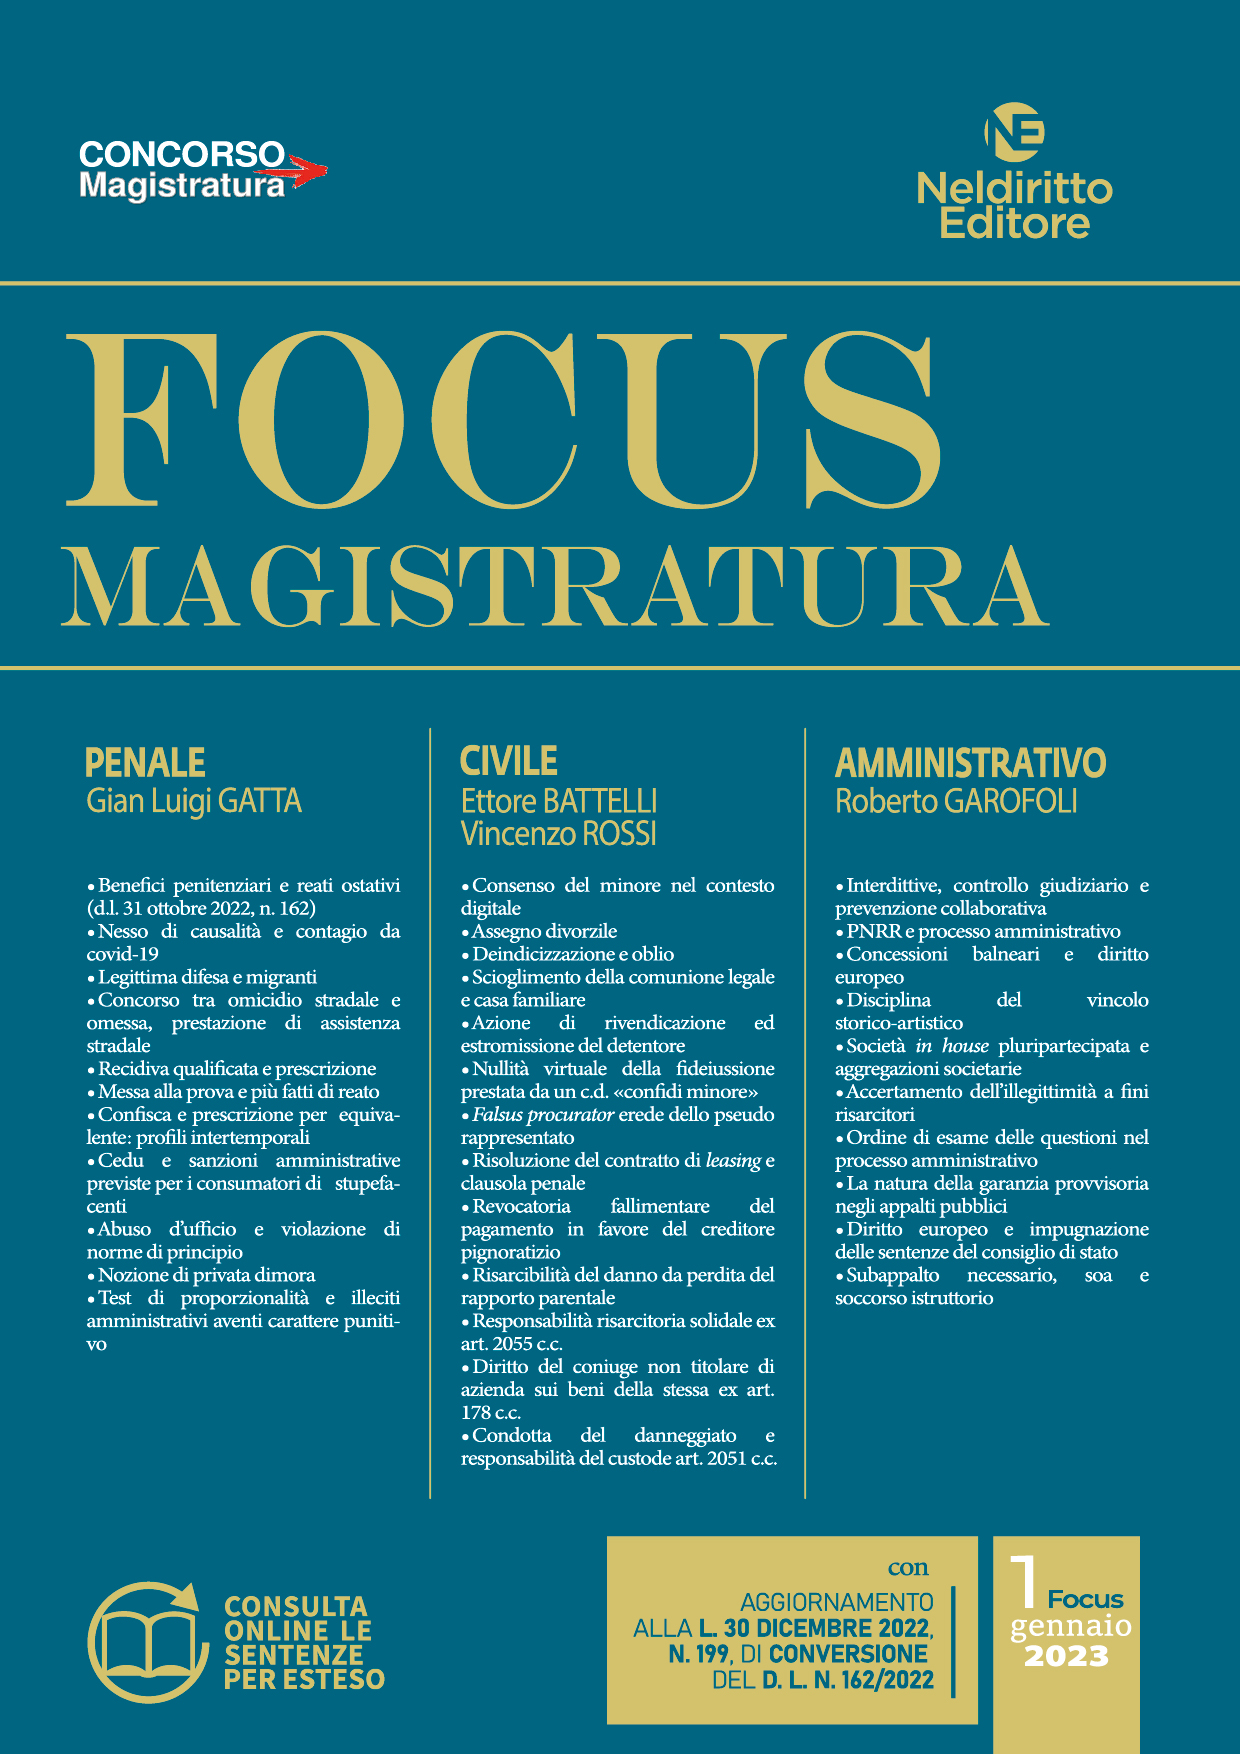 Focus Concorso Magistratura n. 1/2023